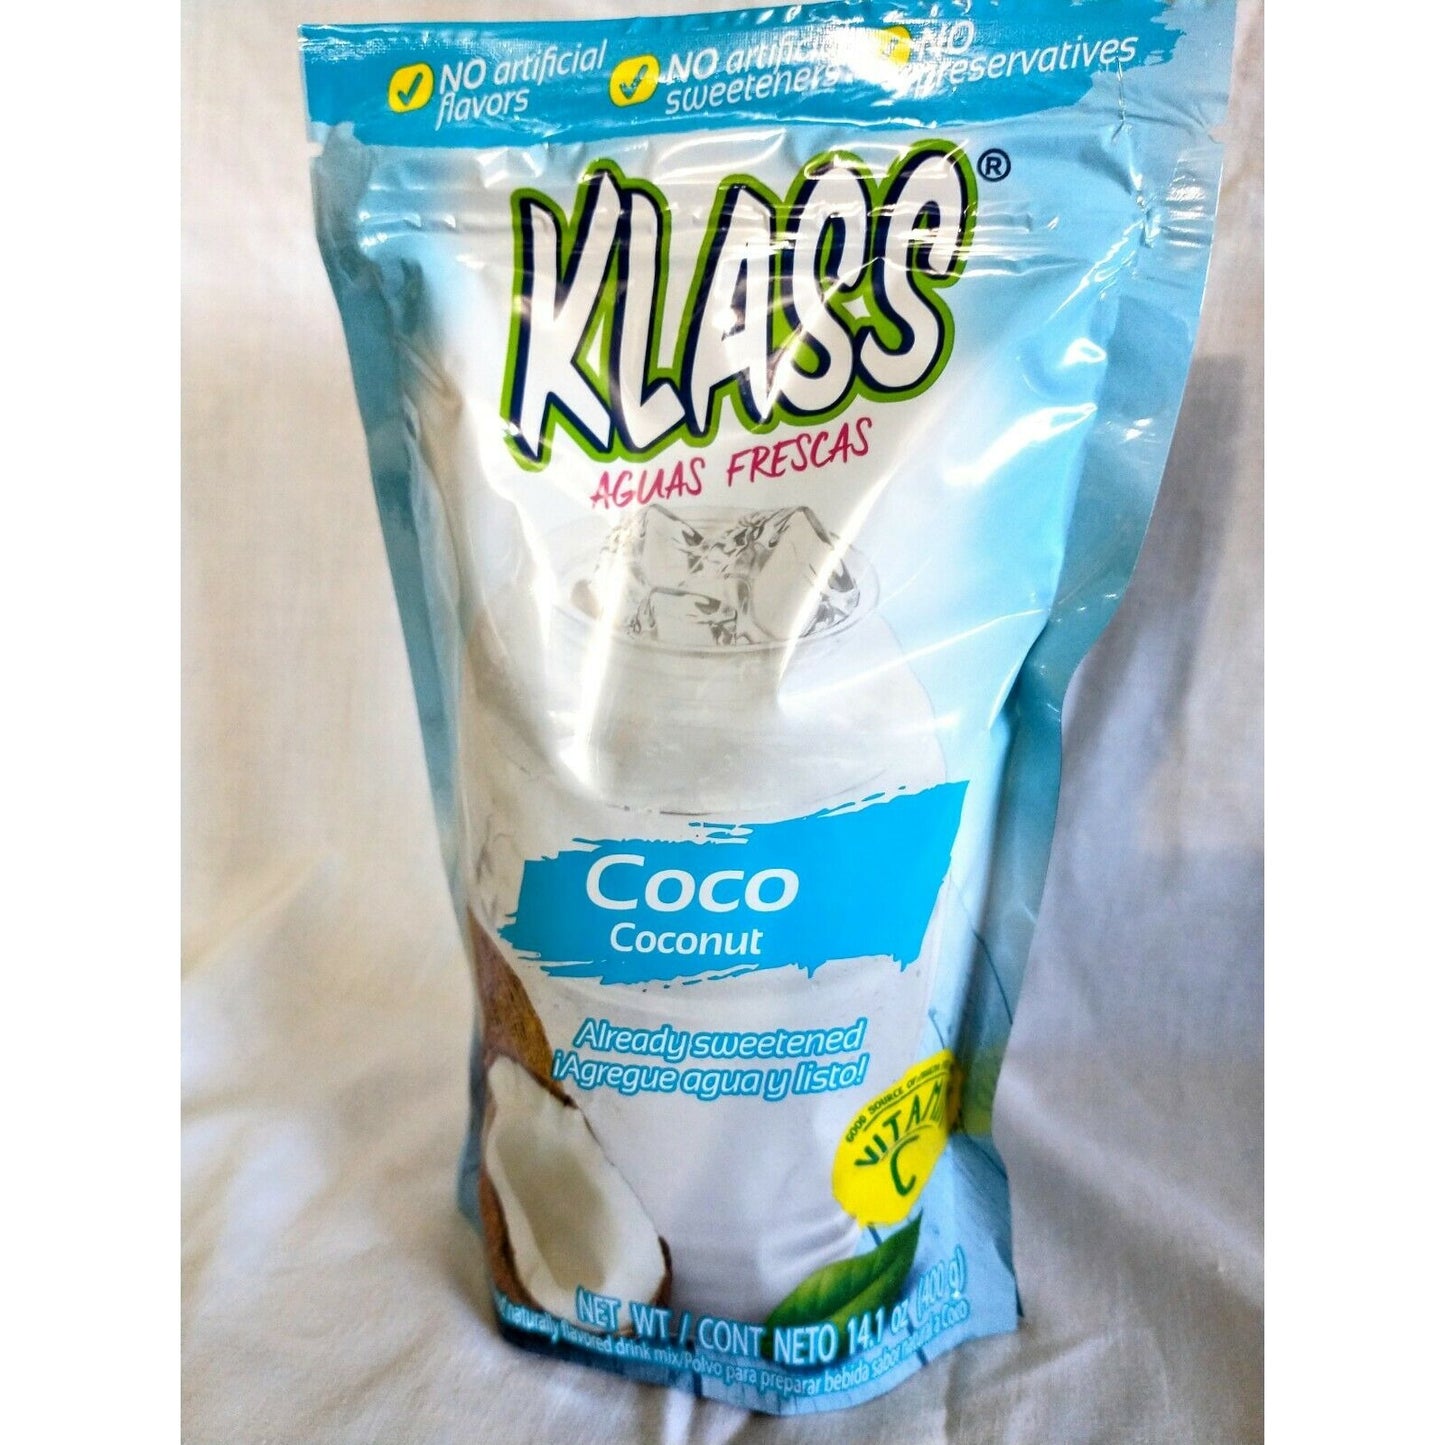 Klass Aguas Frescas Coconut (Coco) Drink Mix 14.1 Oz Package